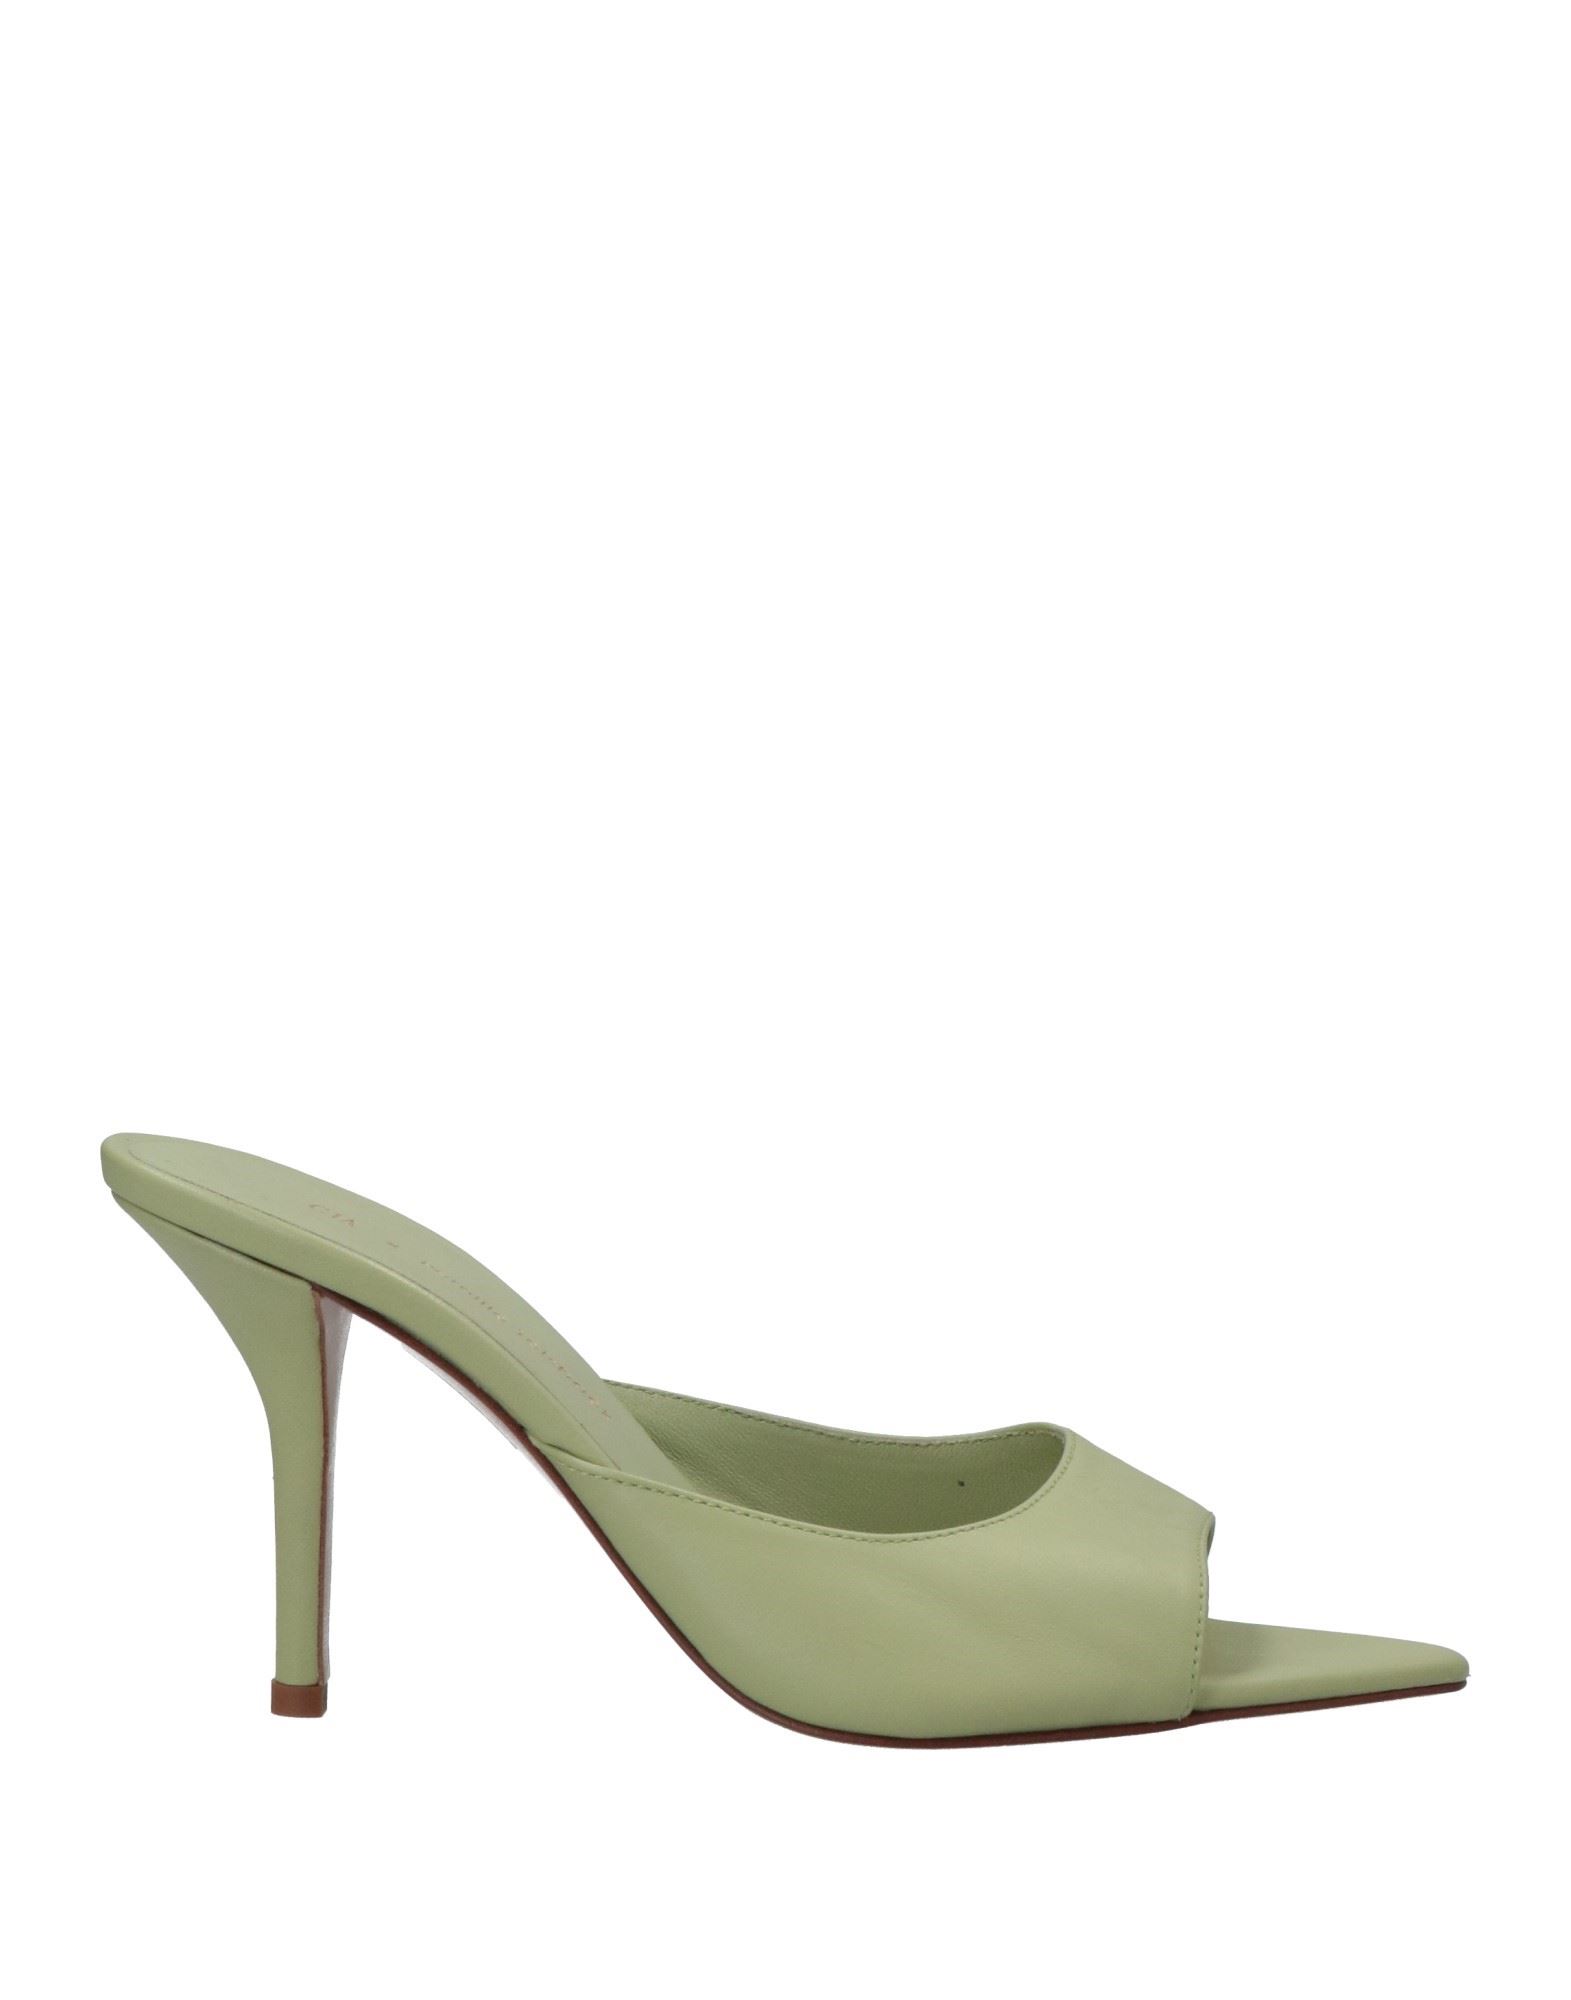 Gia X Pernille Teisbaek Sandals In Sage Green